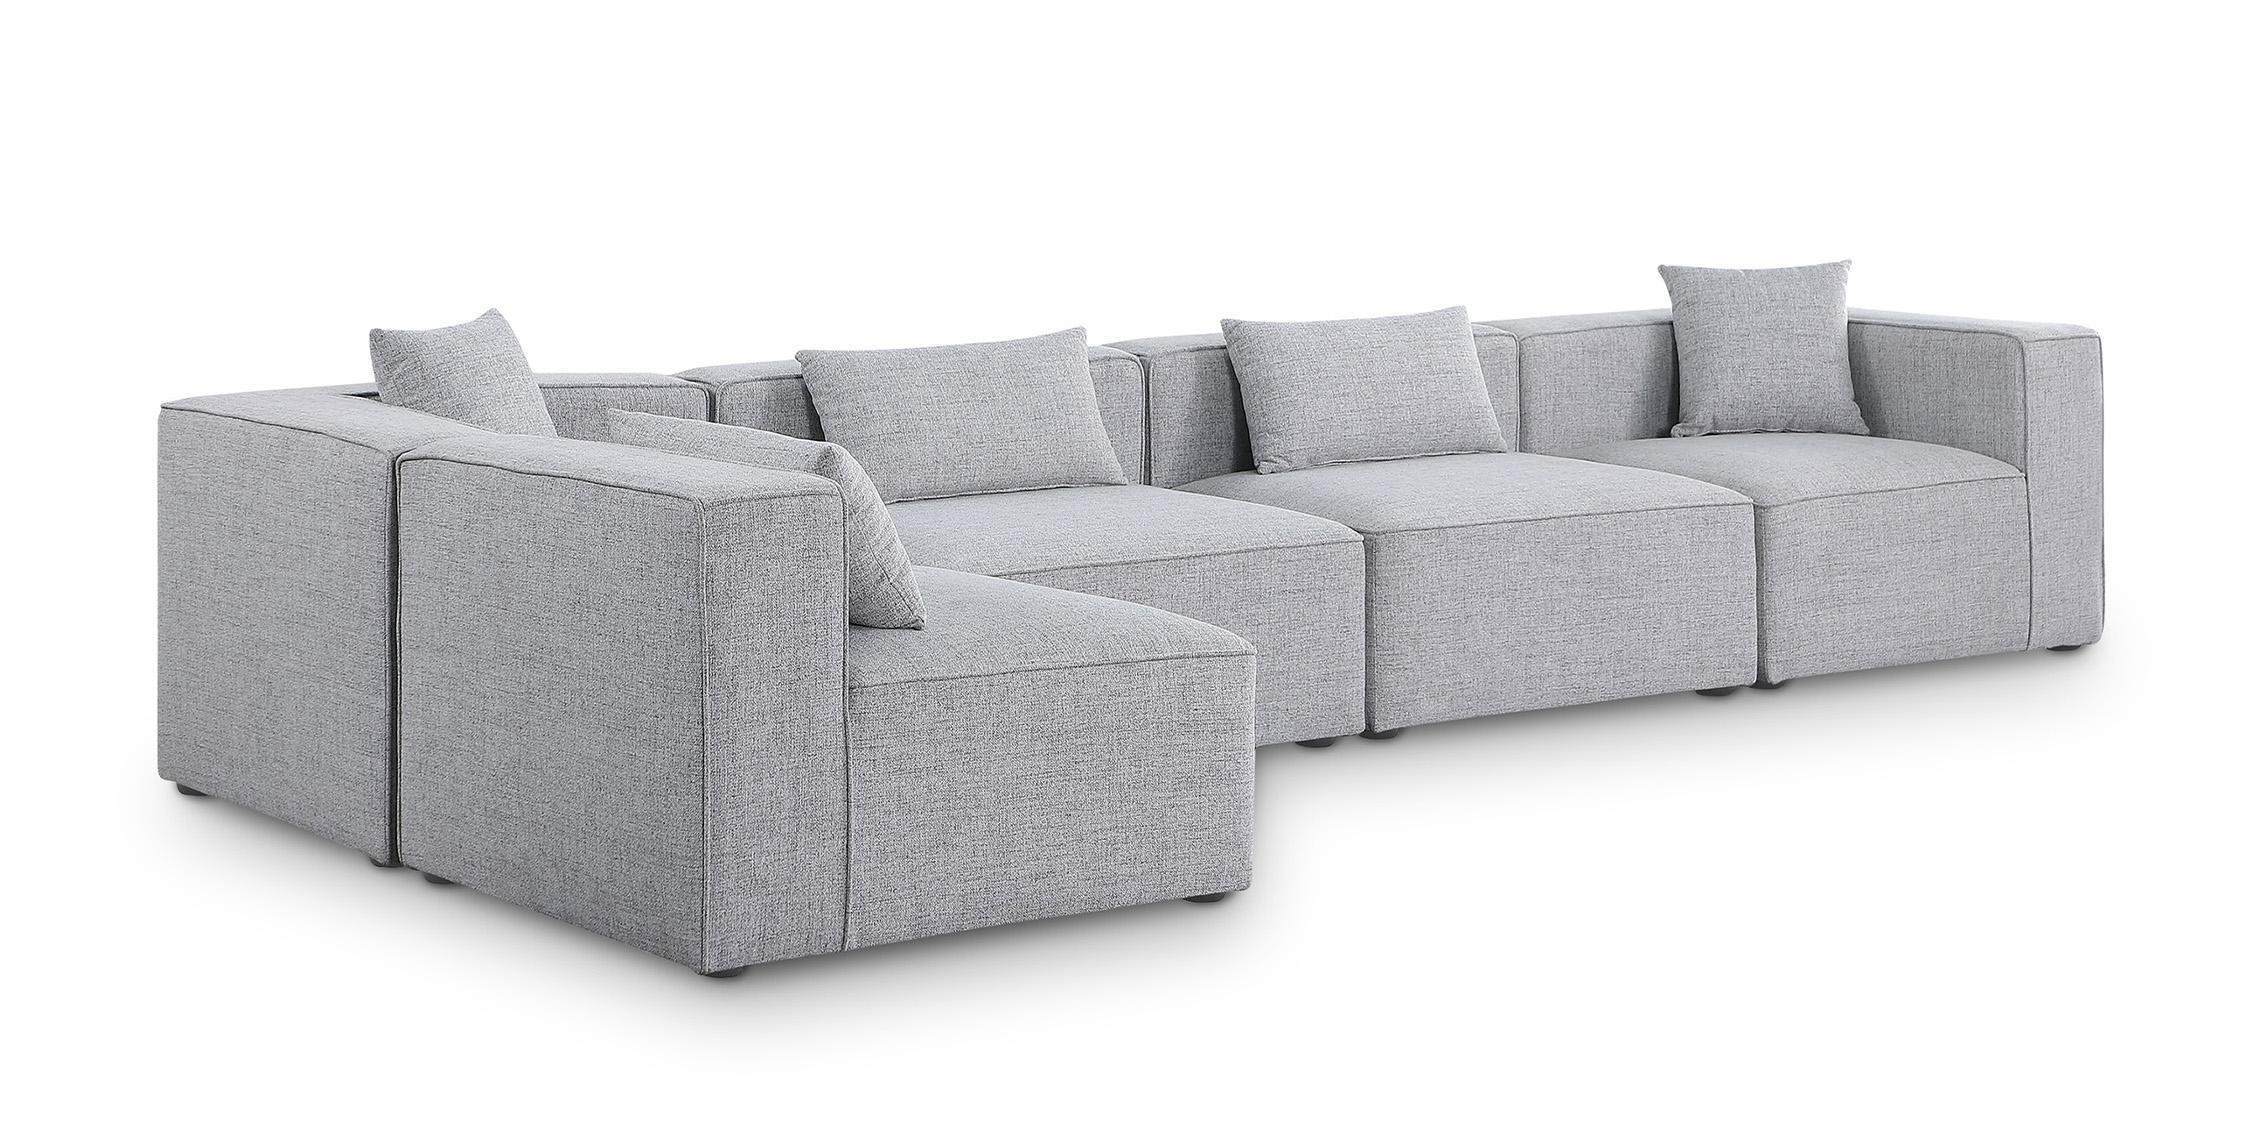 Contemporary, Modern Modular Sectional Sofa CUBE 630Grey-Sec5D 630Grey-Sec5D in Gray Linen